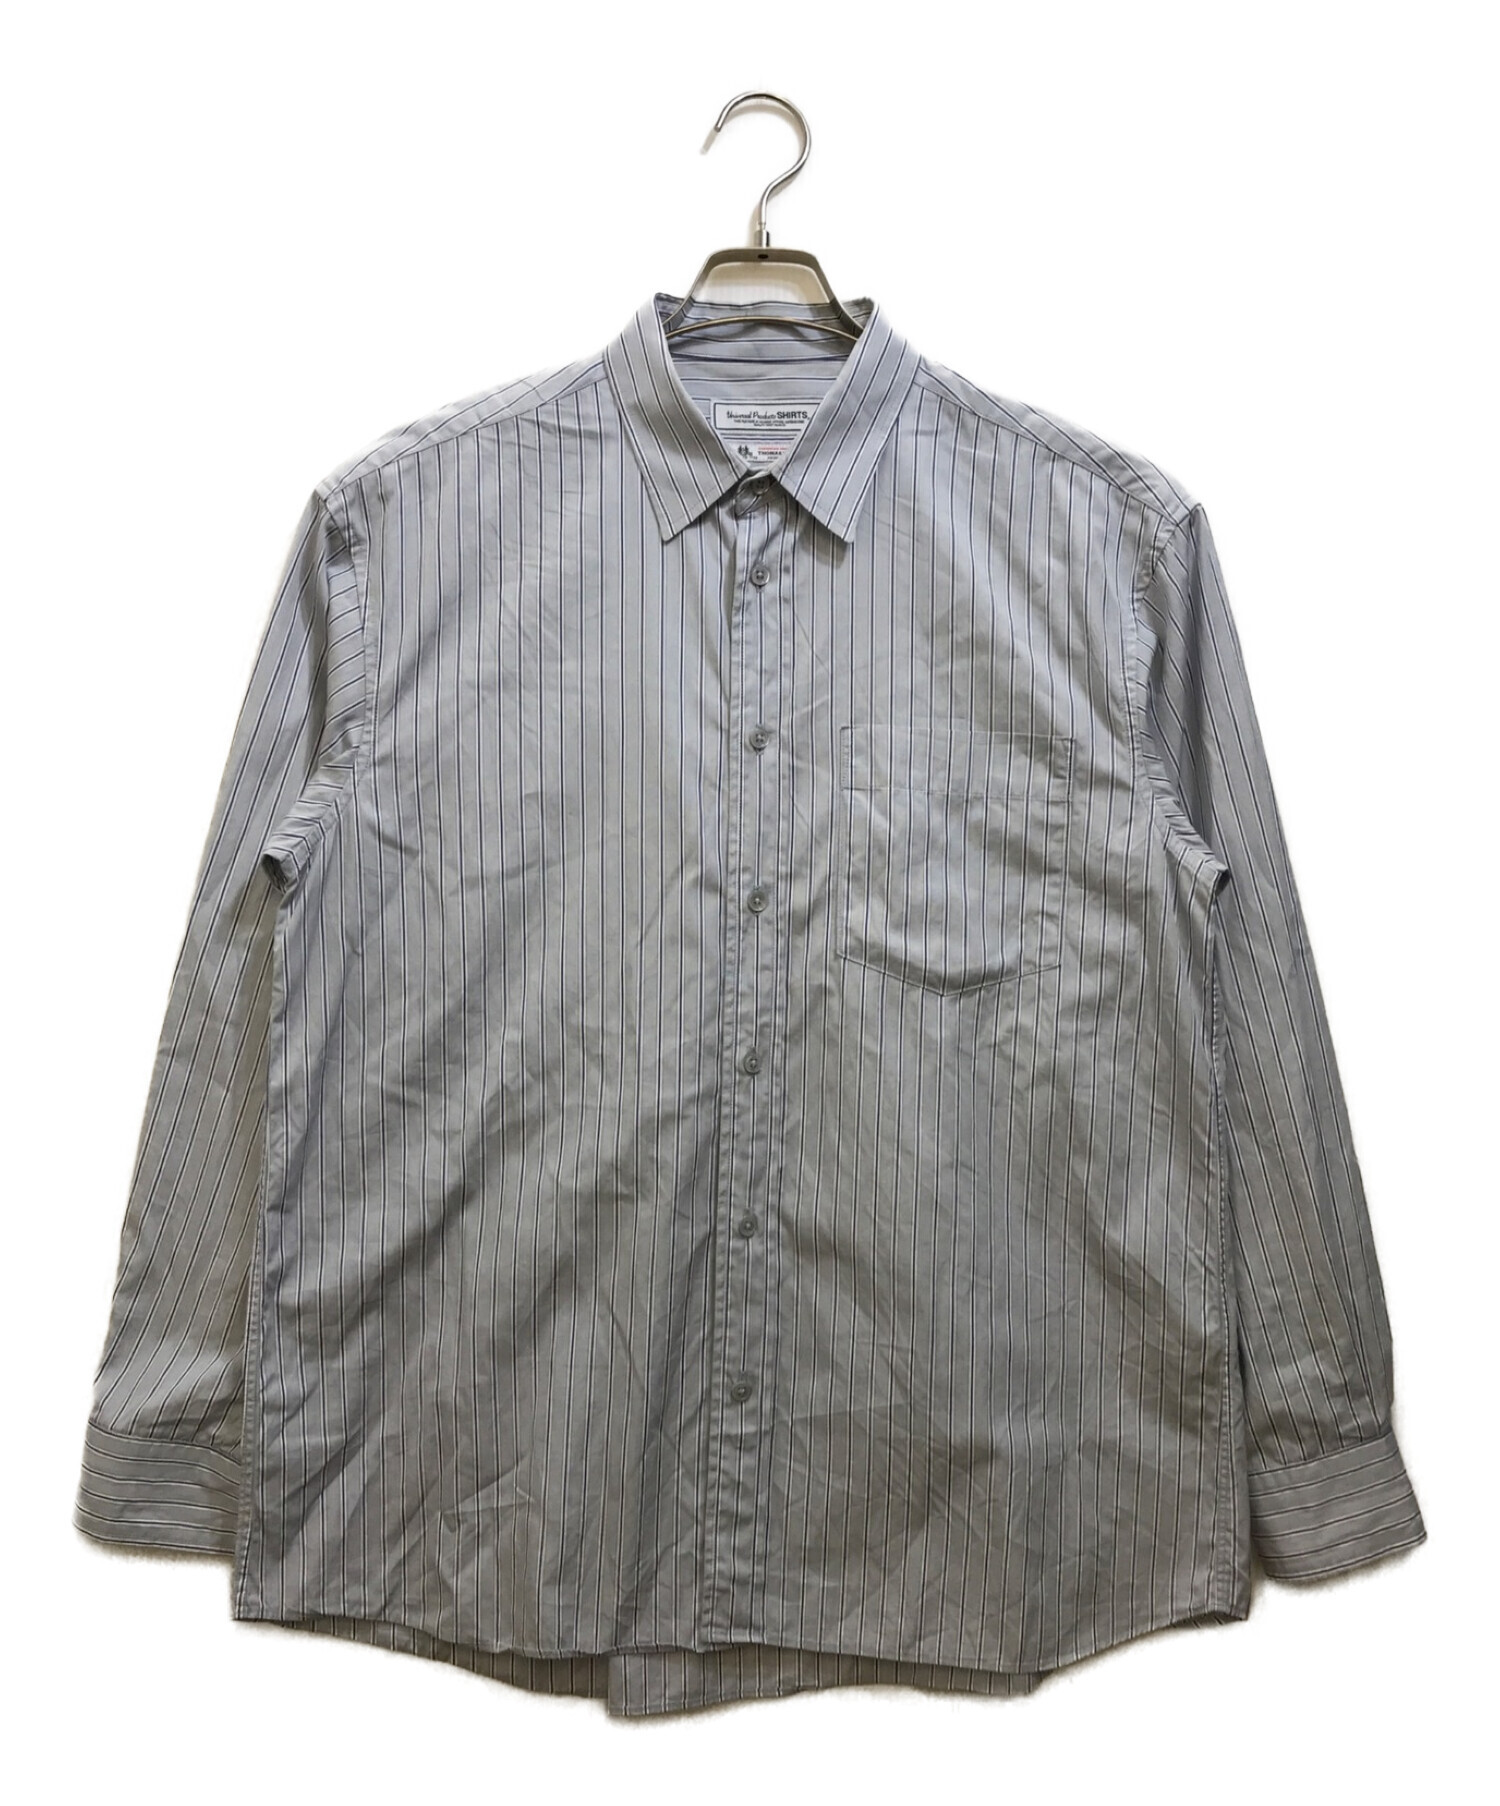 UNIVERSAL PRODUCTS. (ユニバーサルプロダクツ) Thomas mason stripe shirt ライトグレー サイズ:2